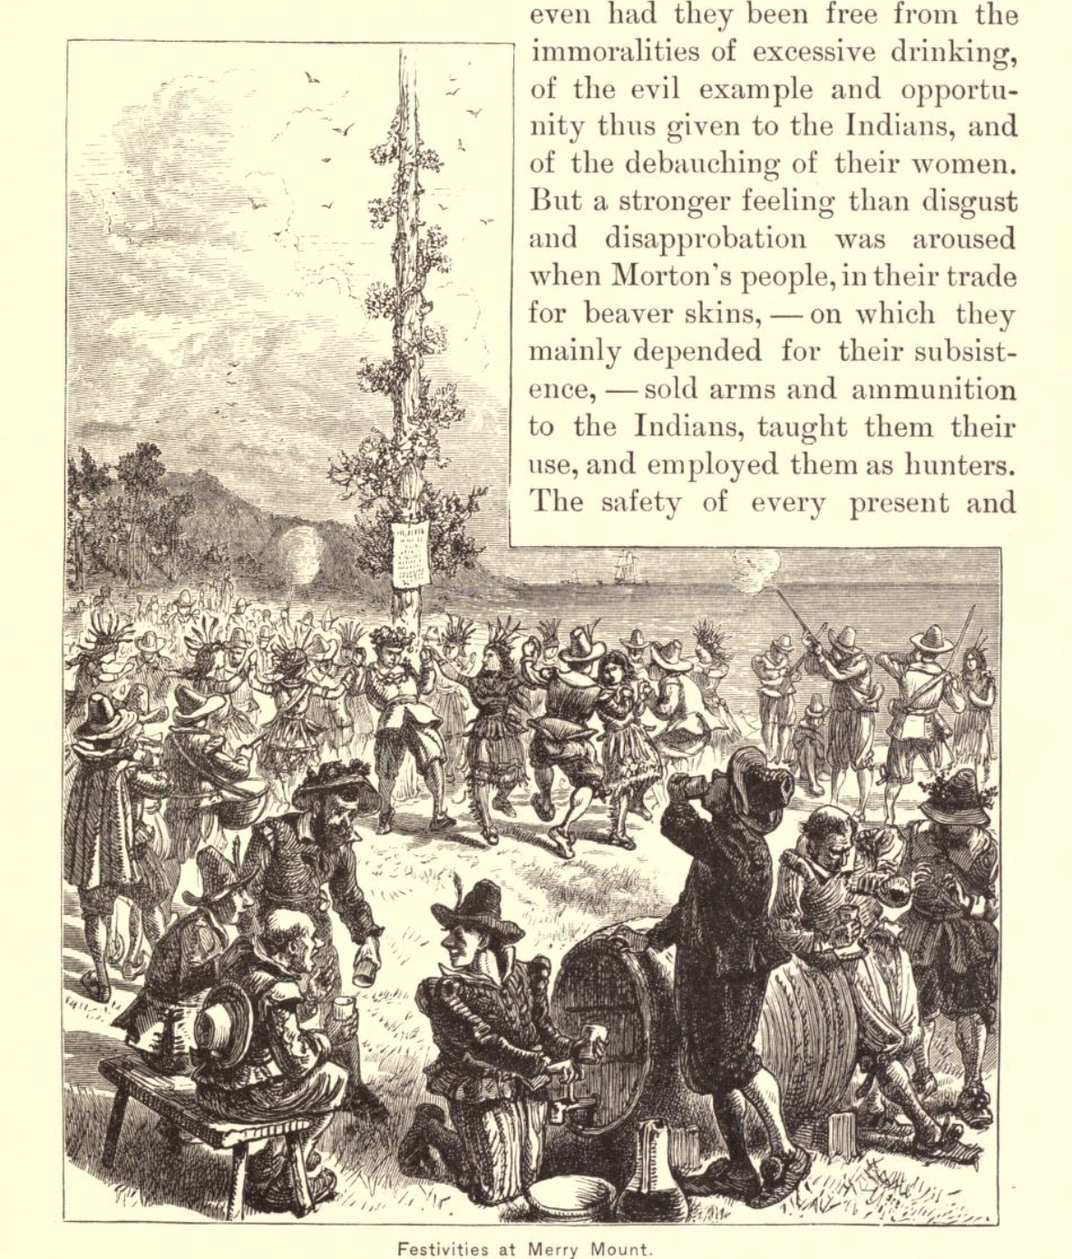 Illustration of the maypole in Morton's Merrymount colony